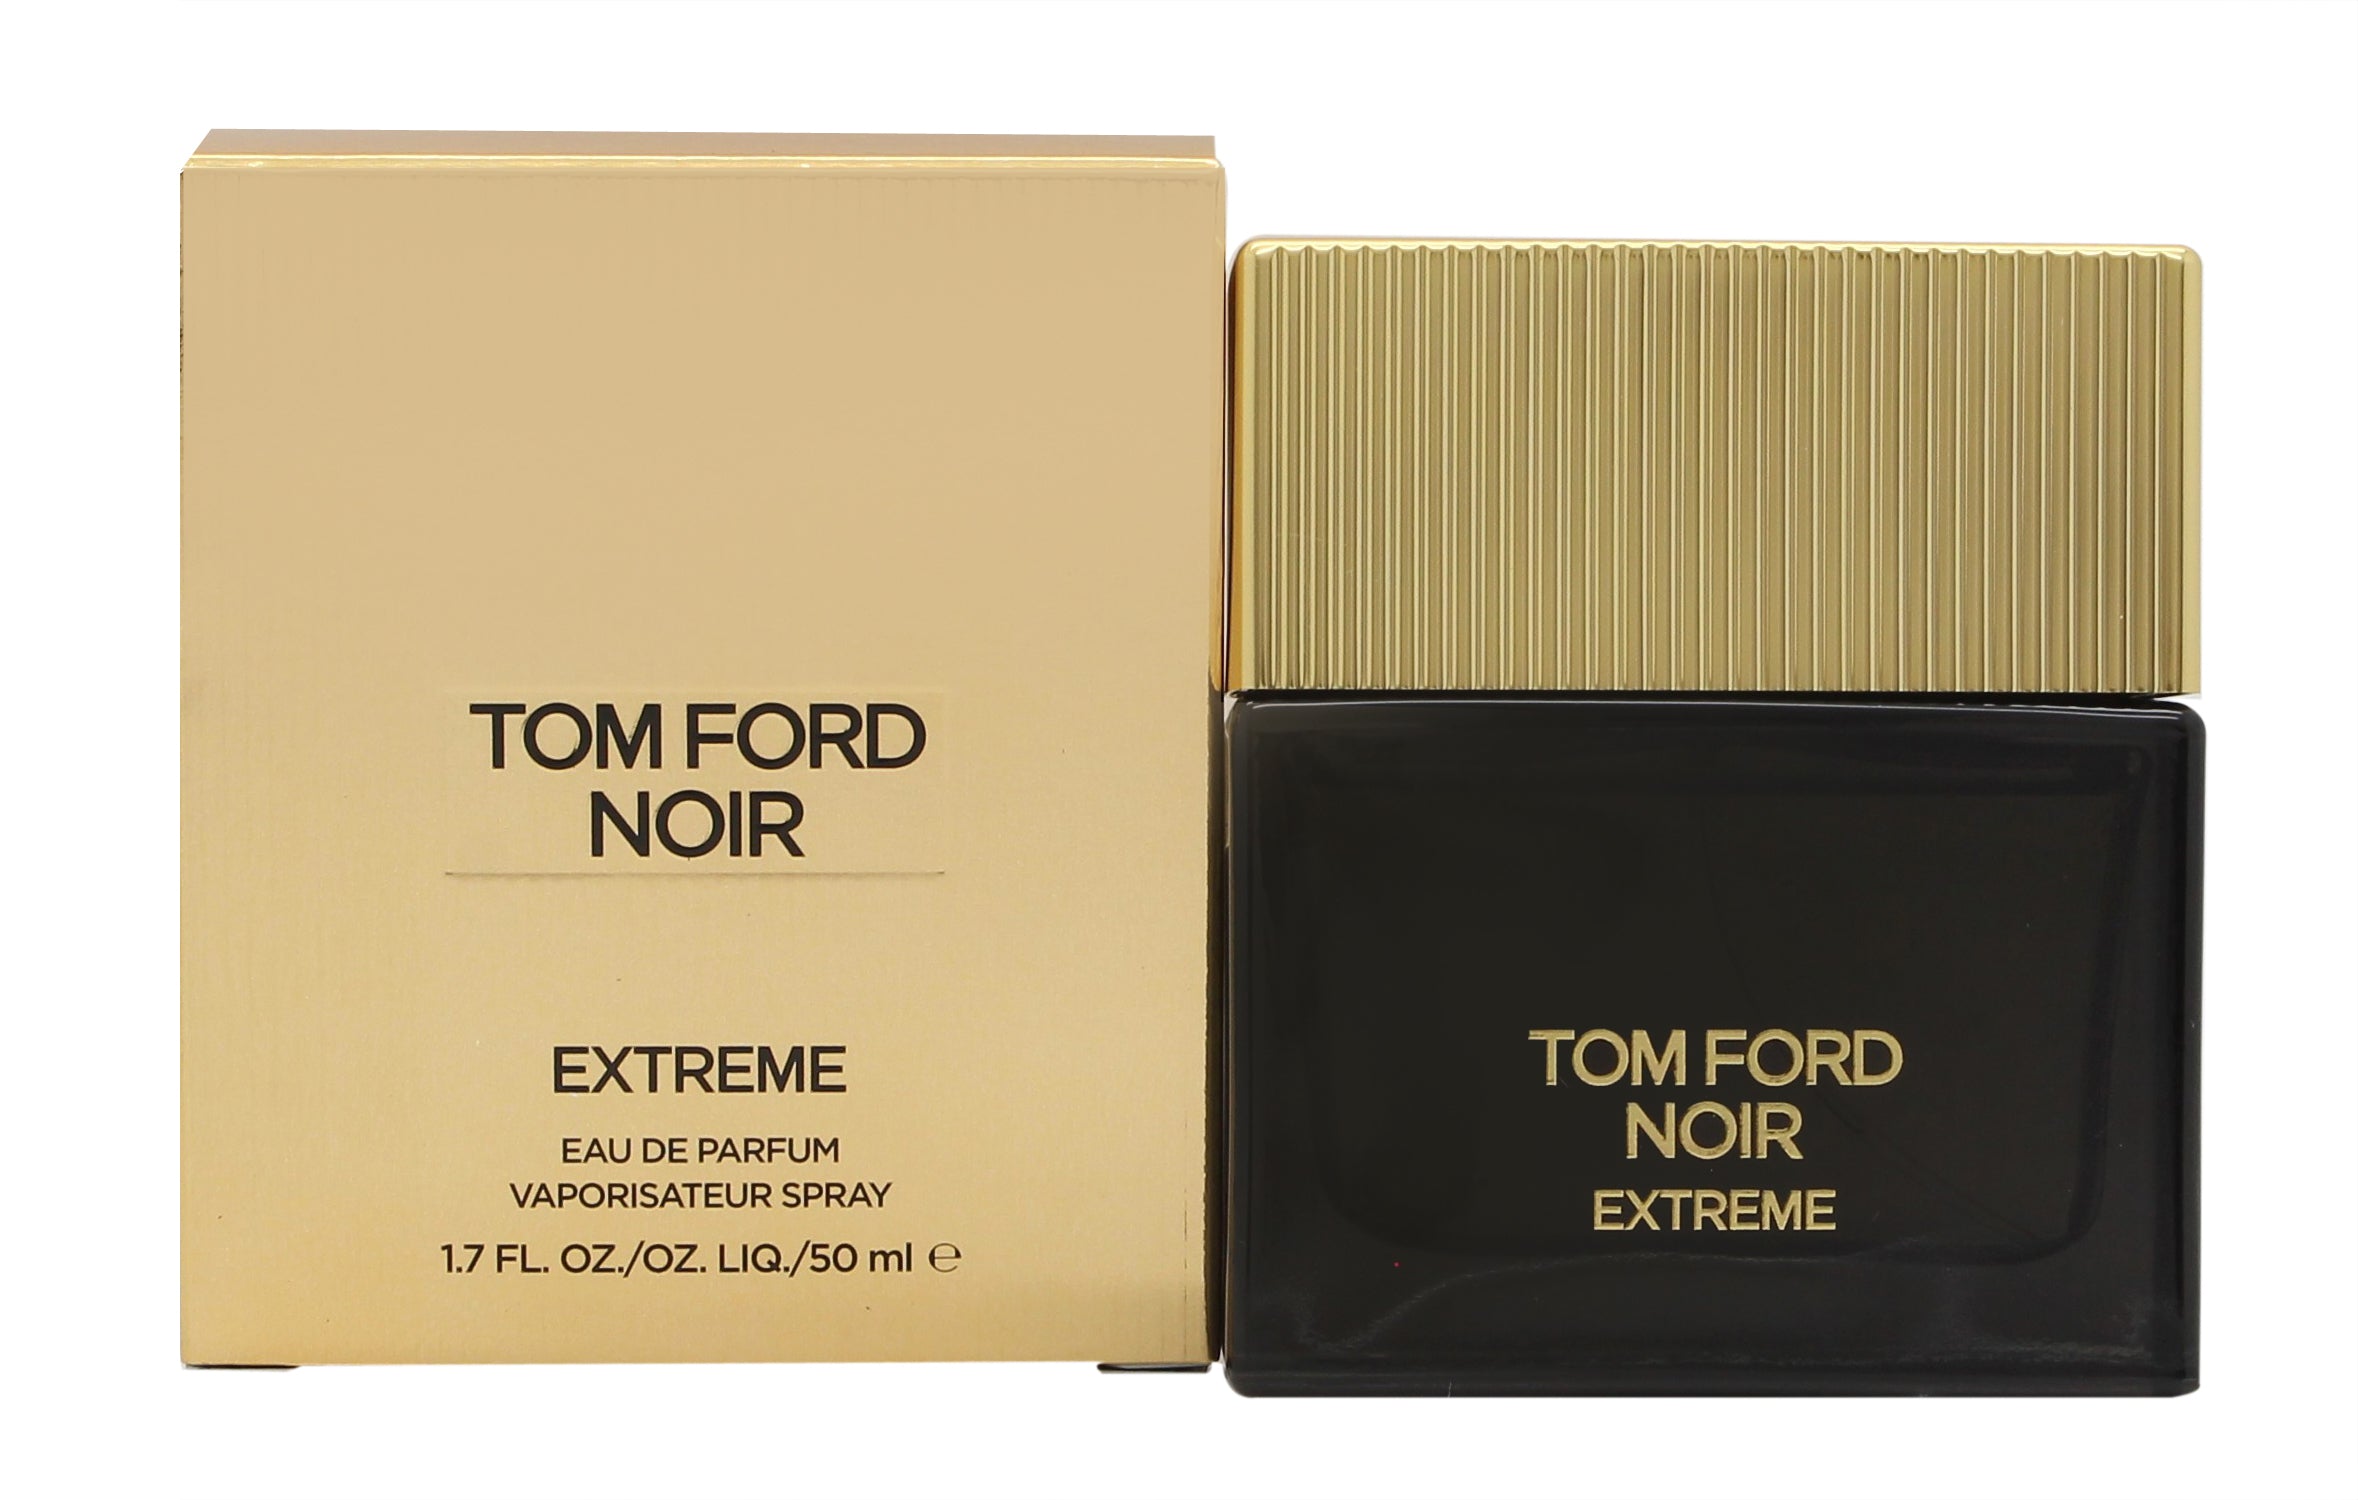 View Tom Ford Noir Extreme Eau de Parfum 50ml Spray information